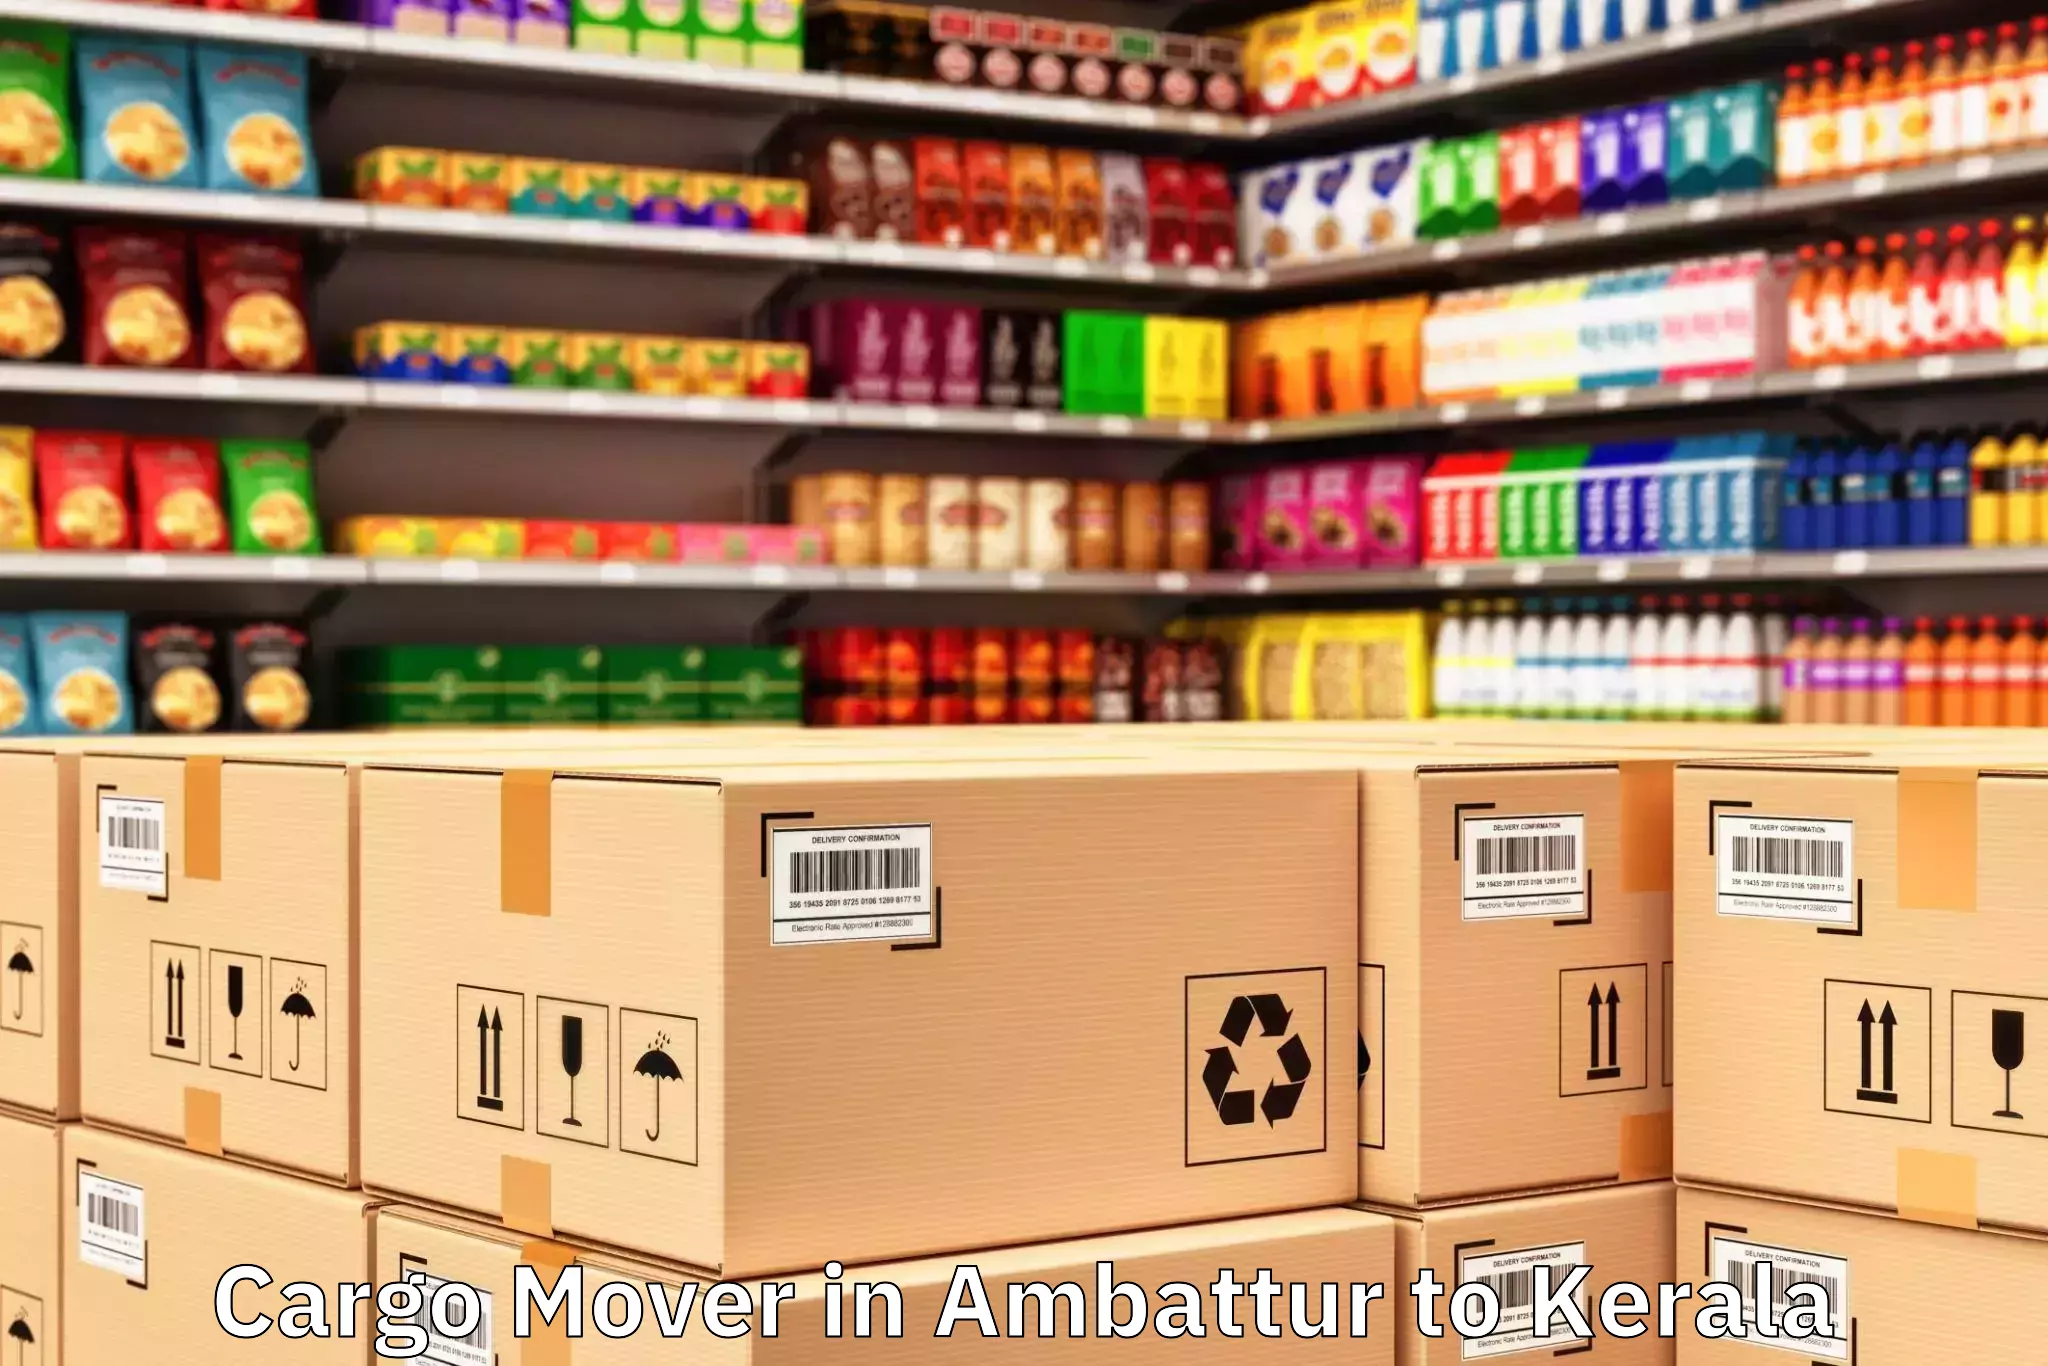 Get Ambattur to Kerala Cargo Mover